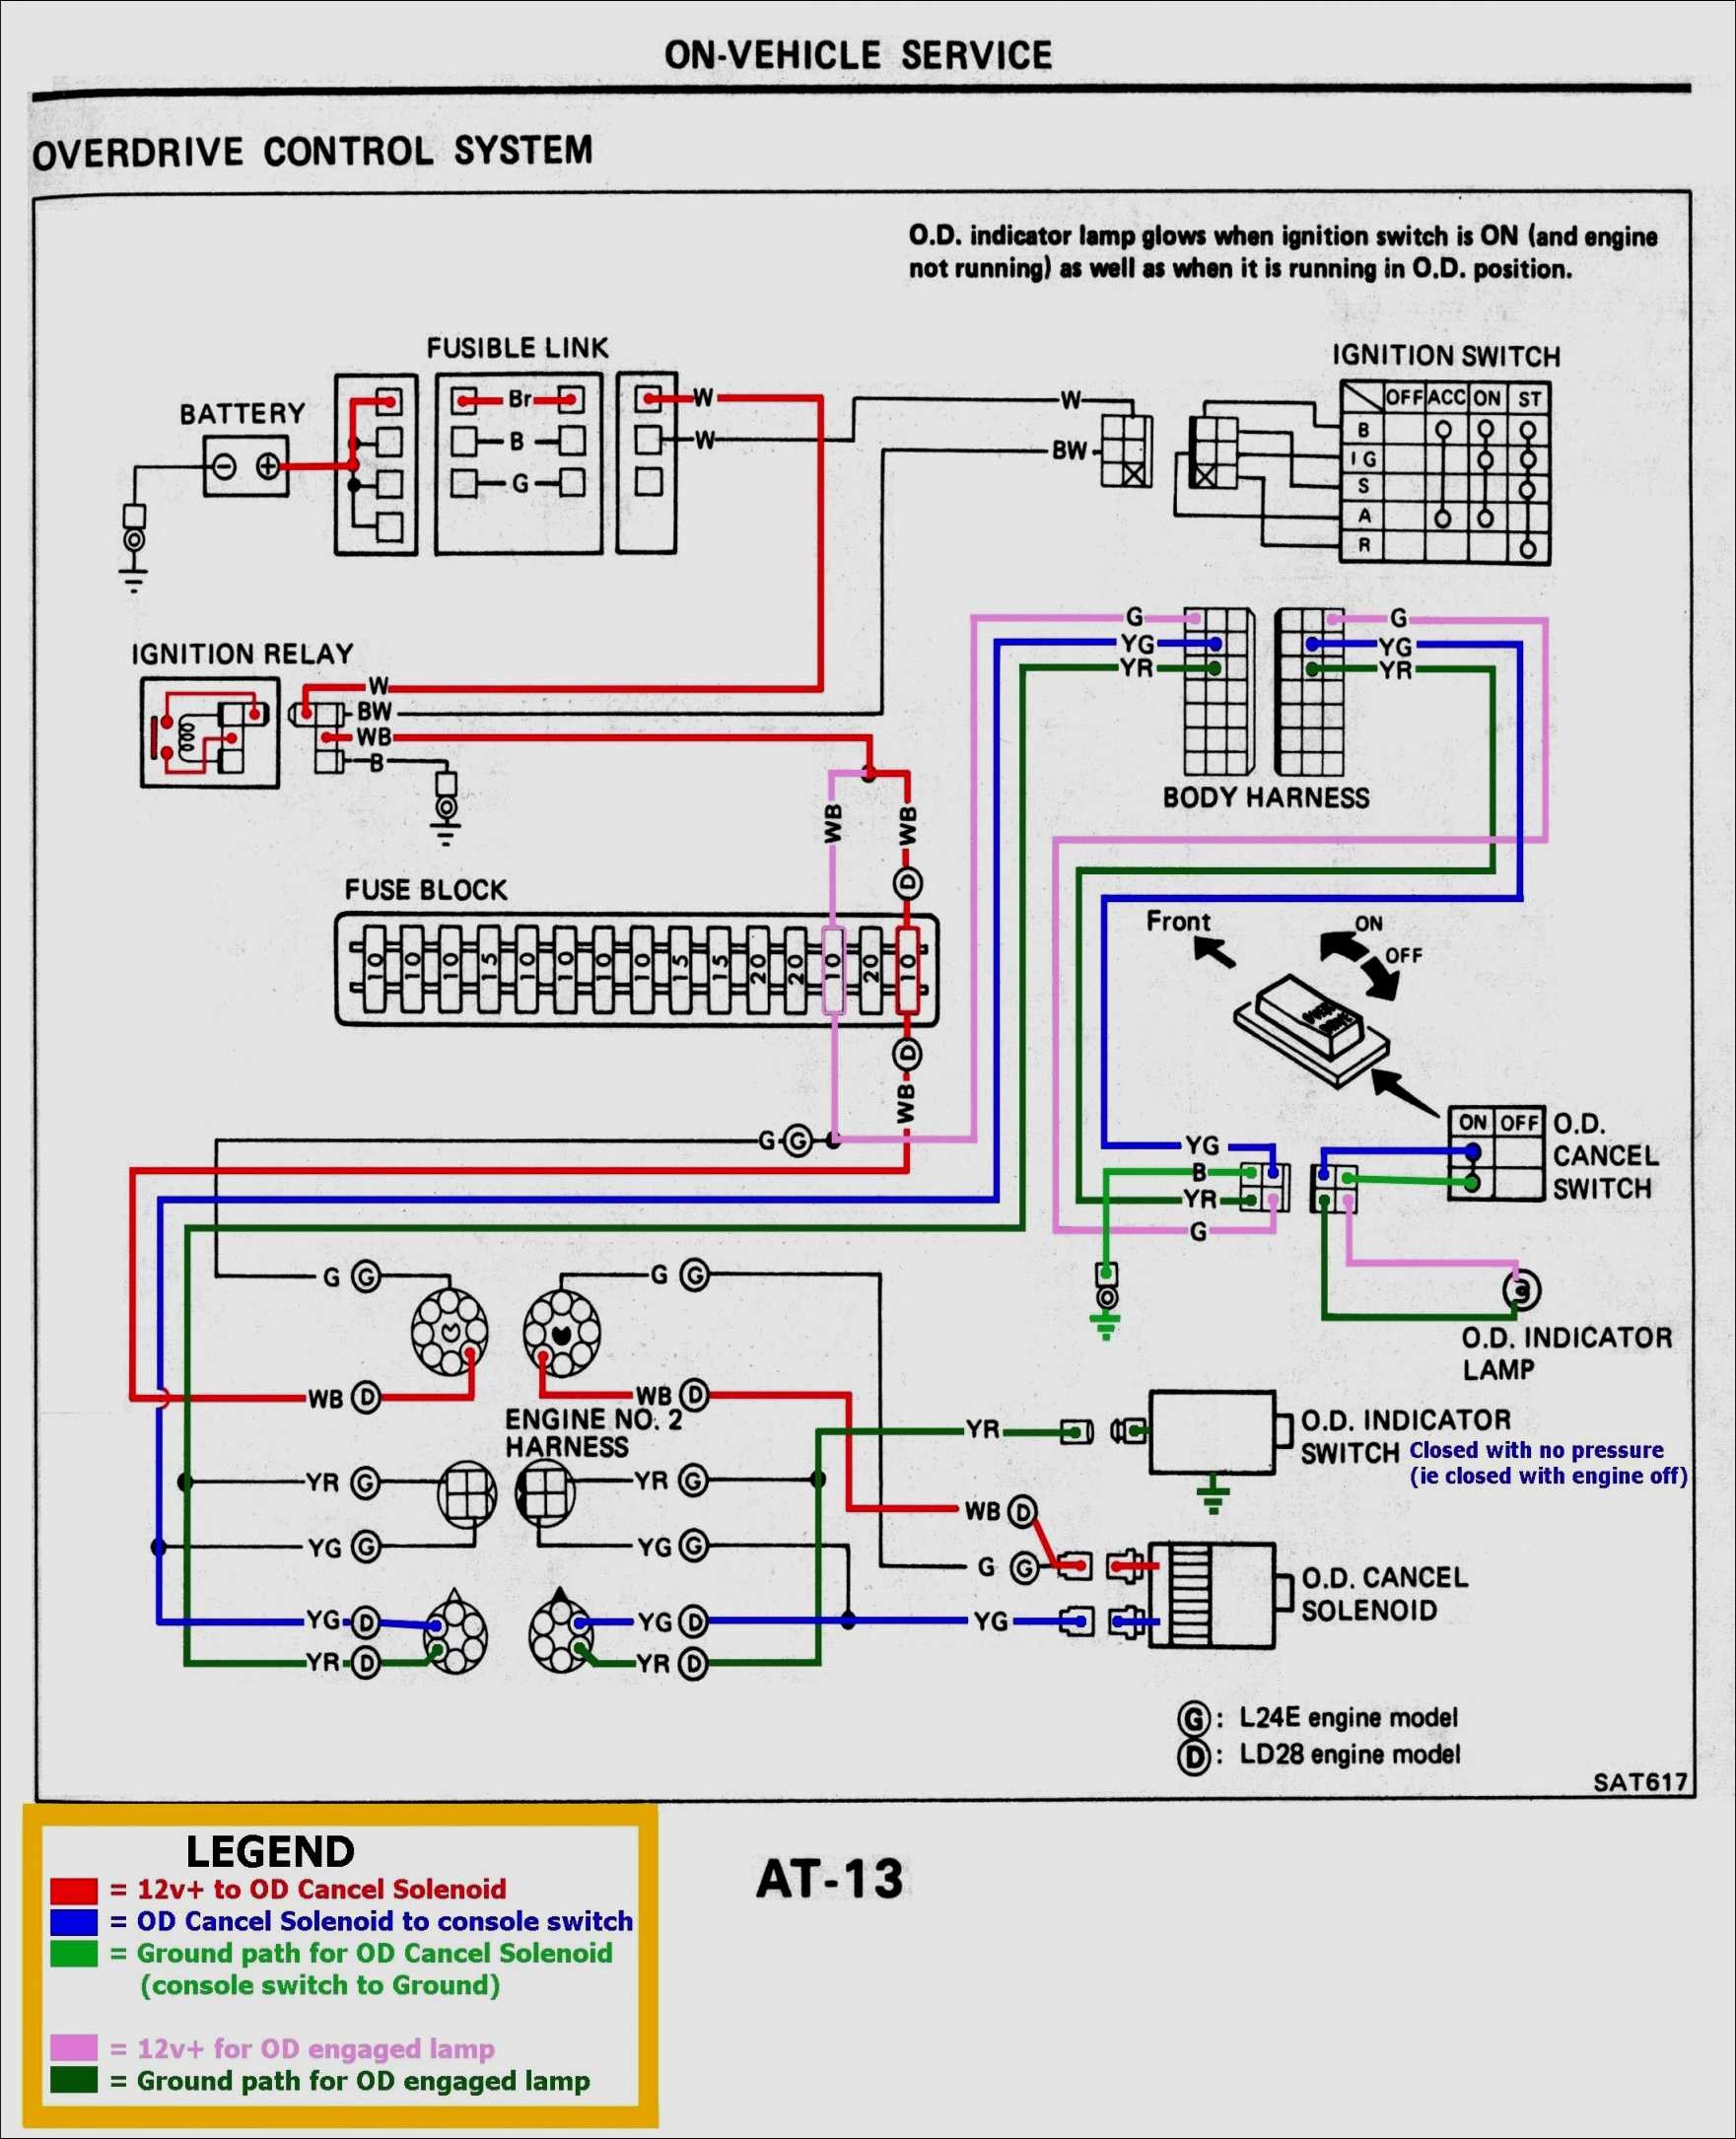 2000 Pontiac Grand Prix Engine Diagram 2002 Oldsmobile Alero Radio Wiring Diagram Wiring Diagram Week Of 2000 Pontiac Grand Prix Engine Diagram